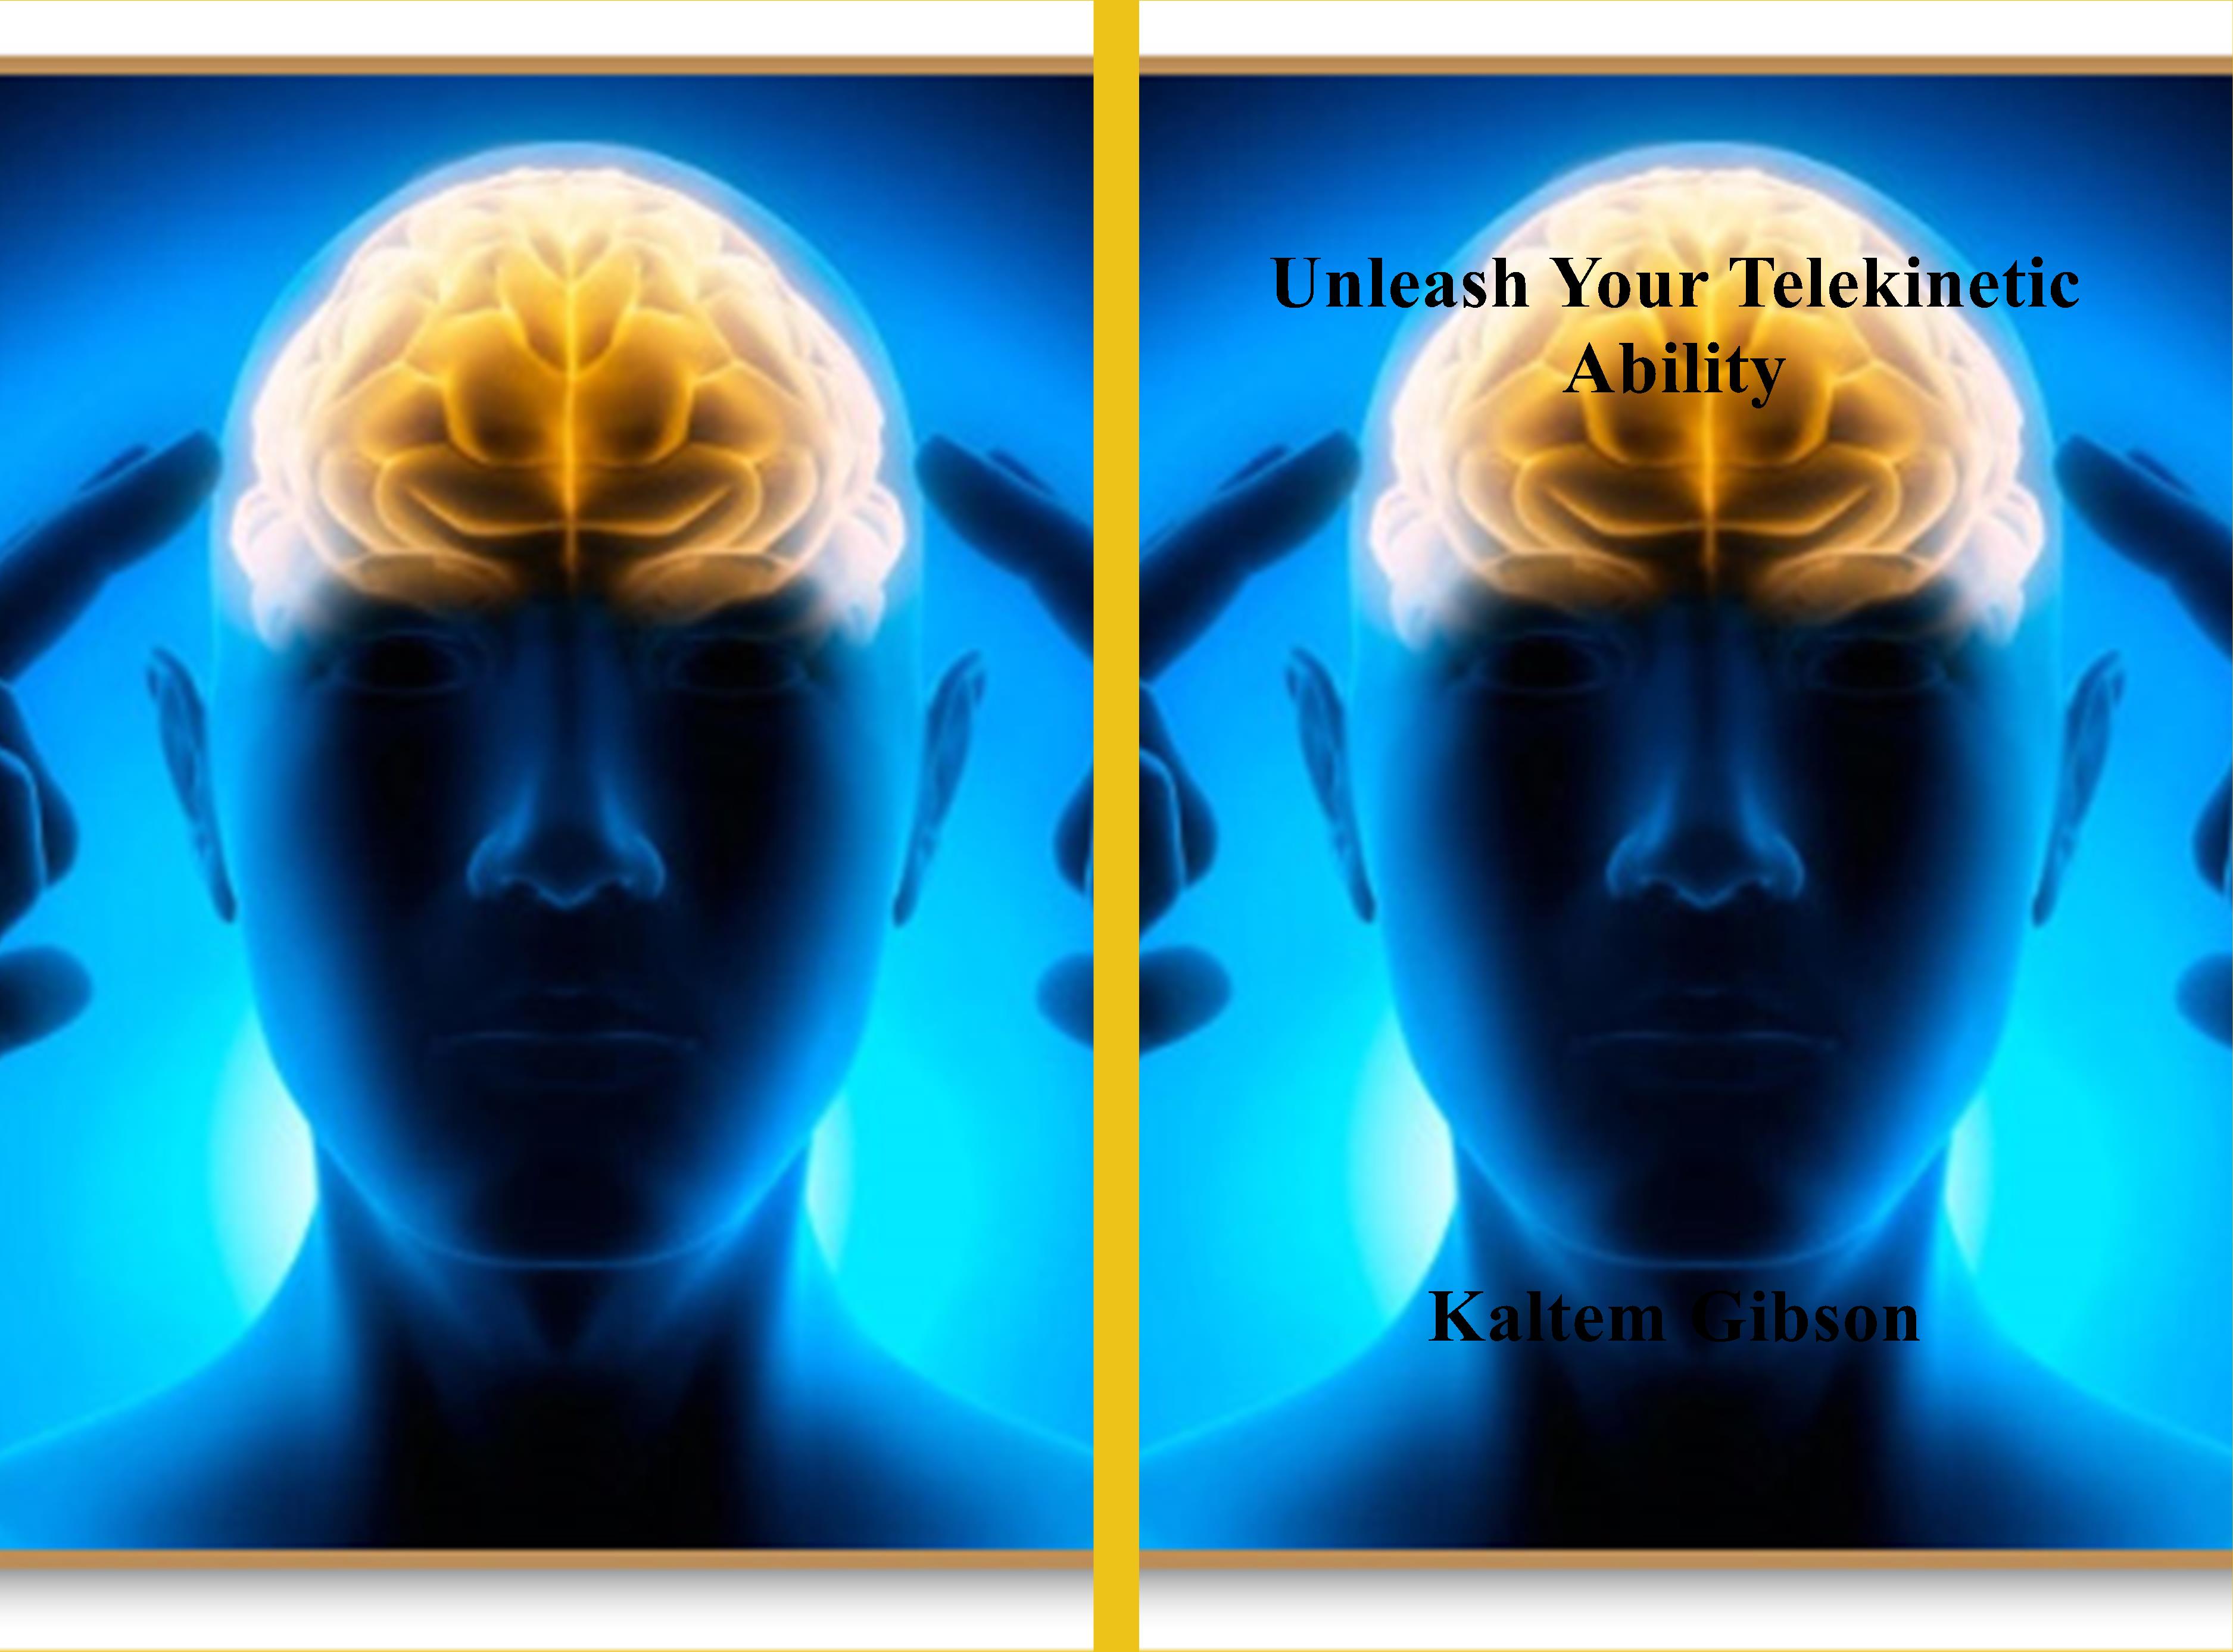 Unleash Your Telekinetic Ability cover image